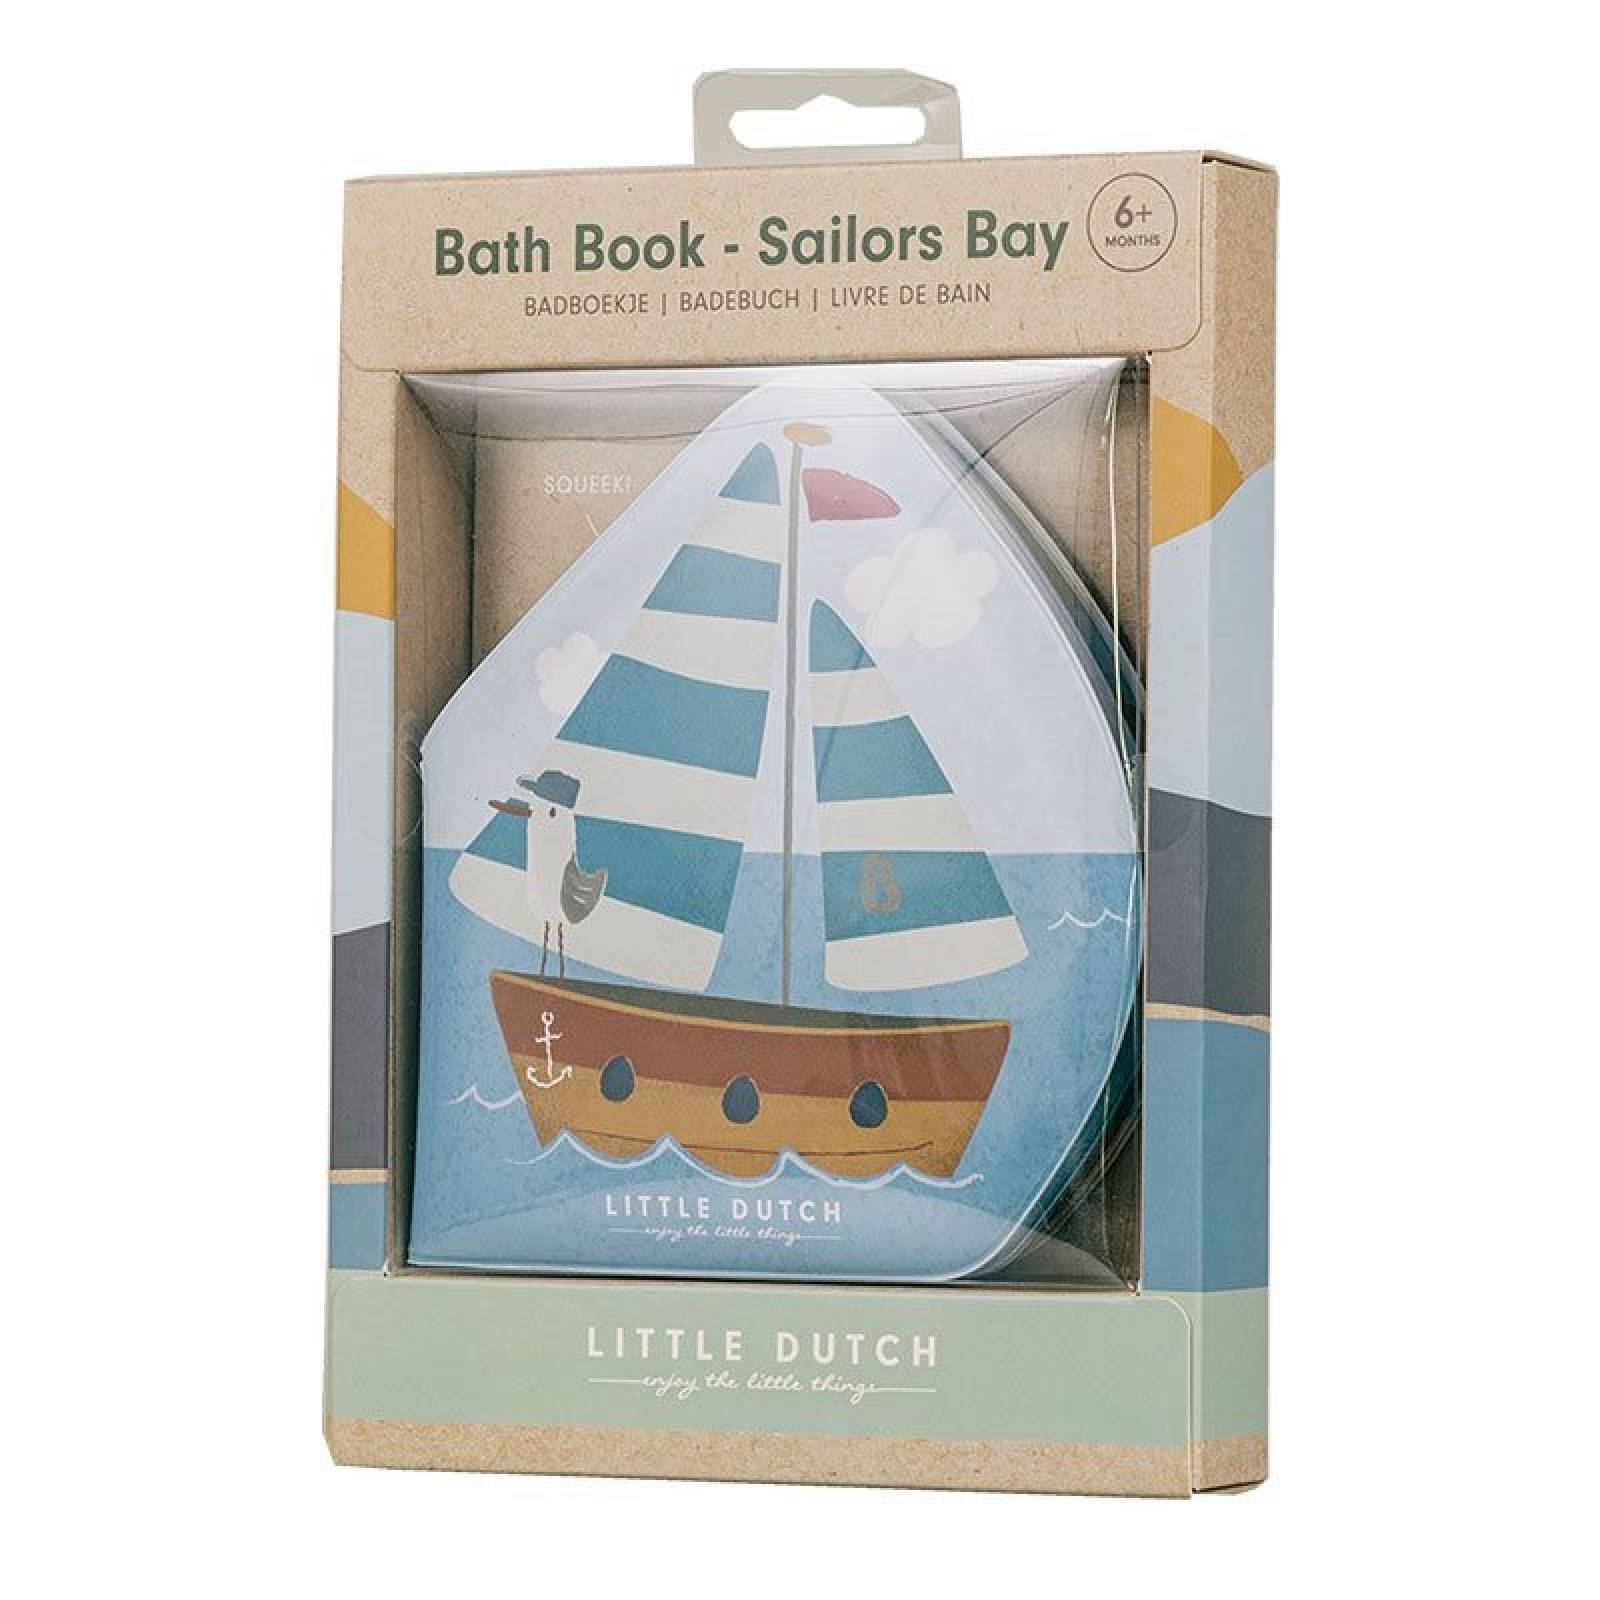 Sailors Bay Bath Book By Little Dutch 6m+ thumbnails